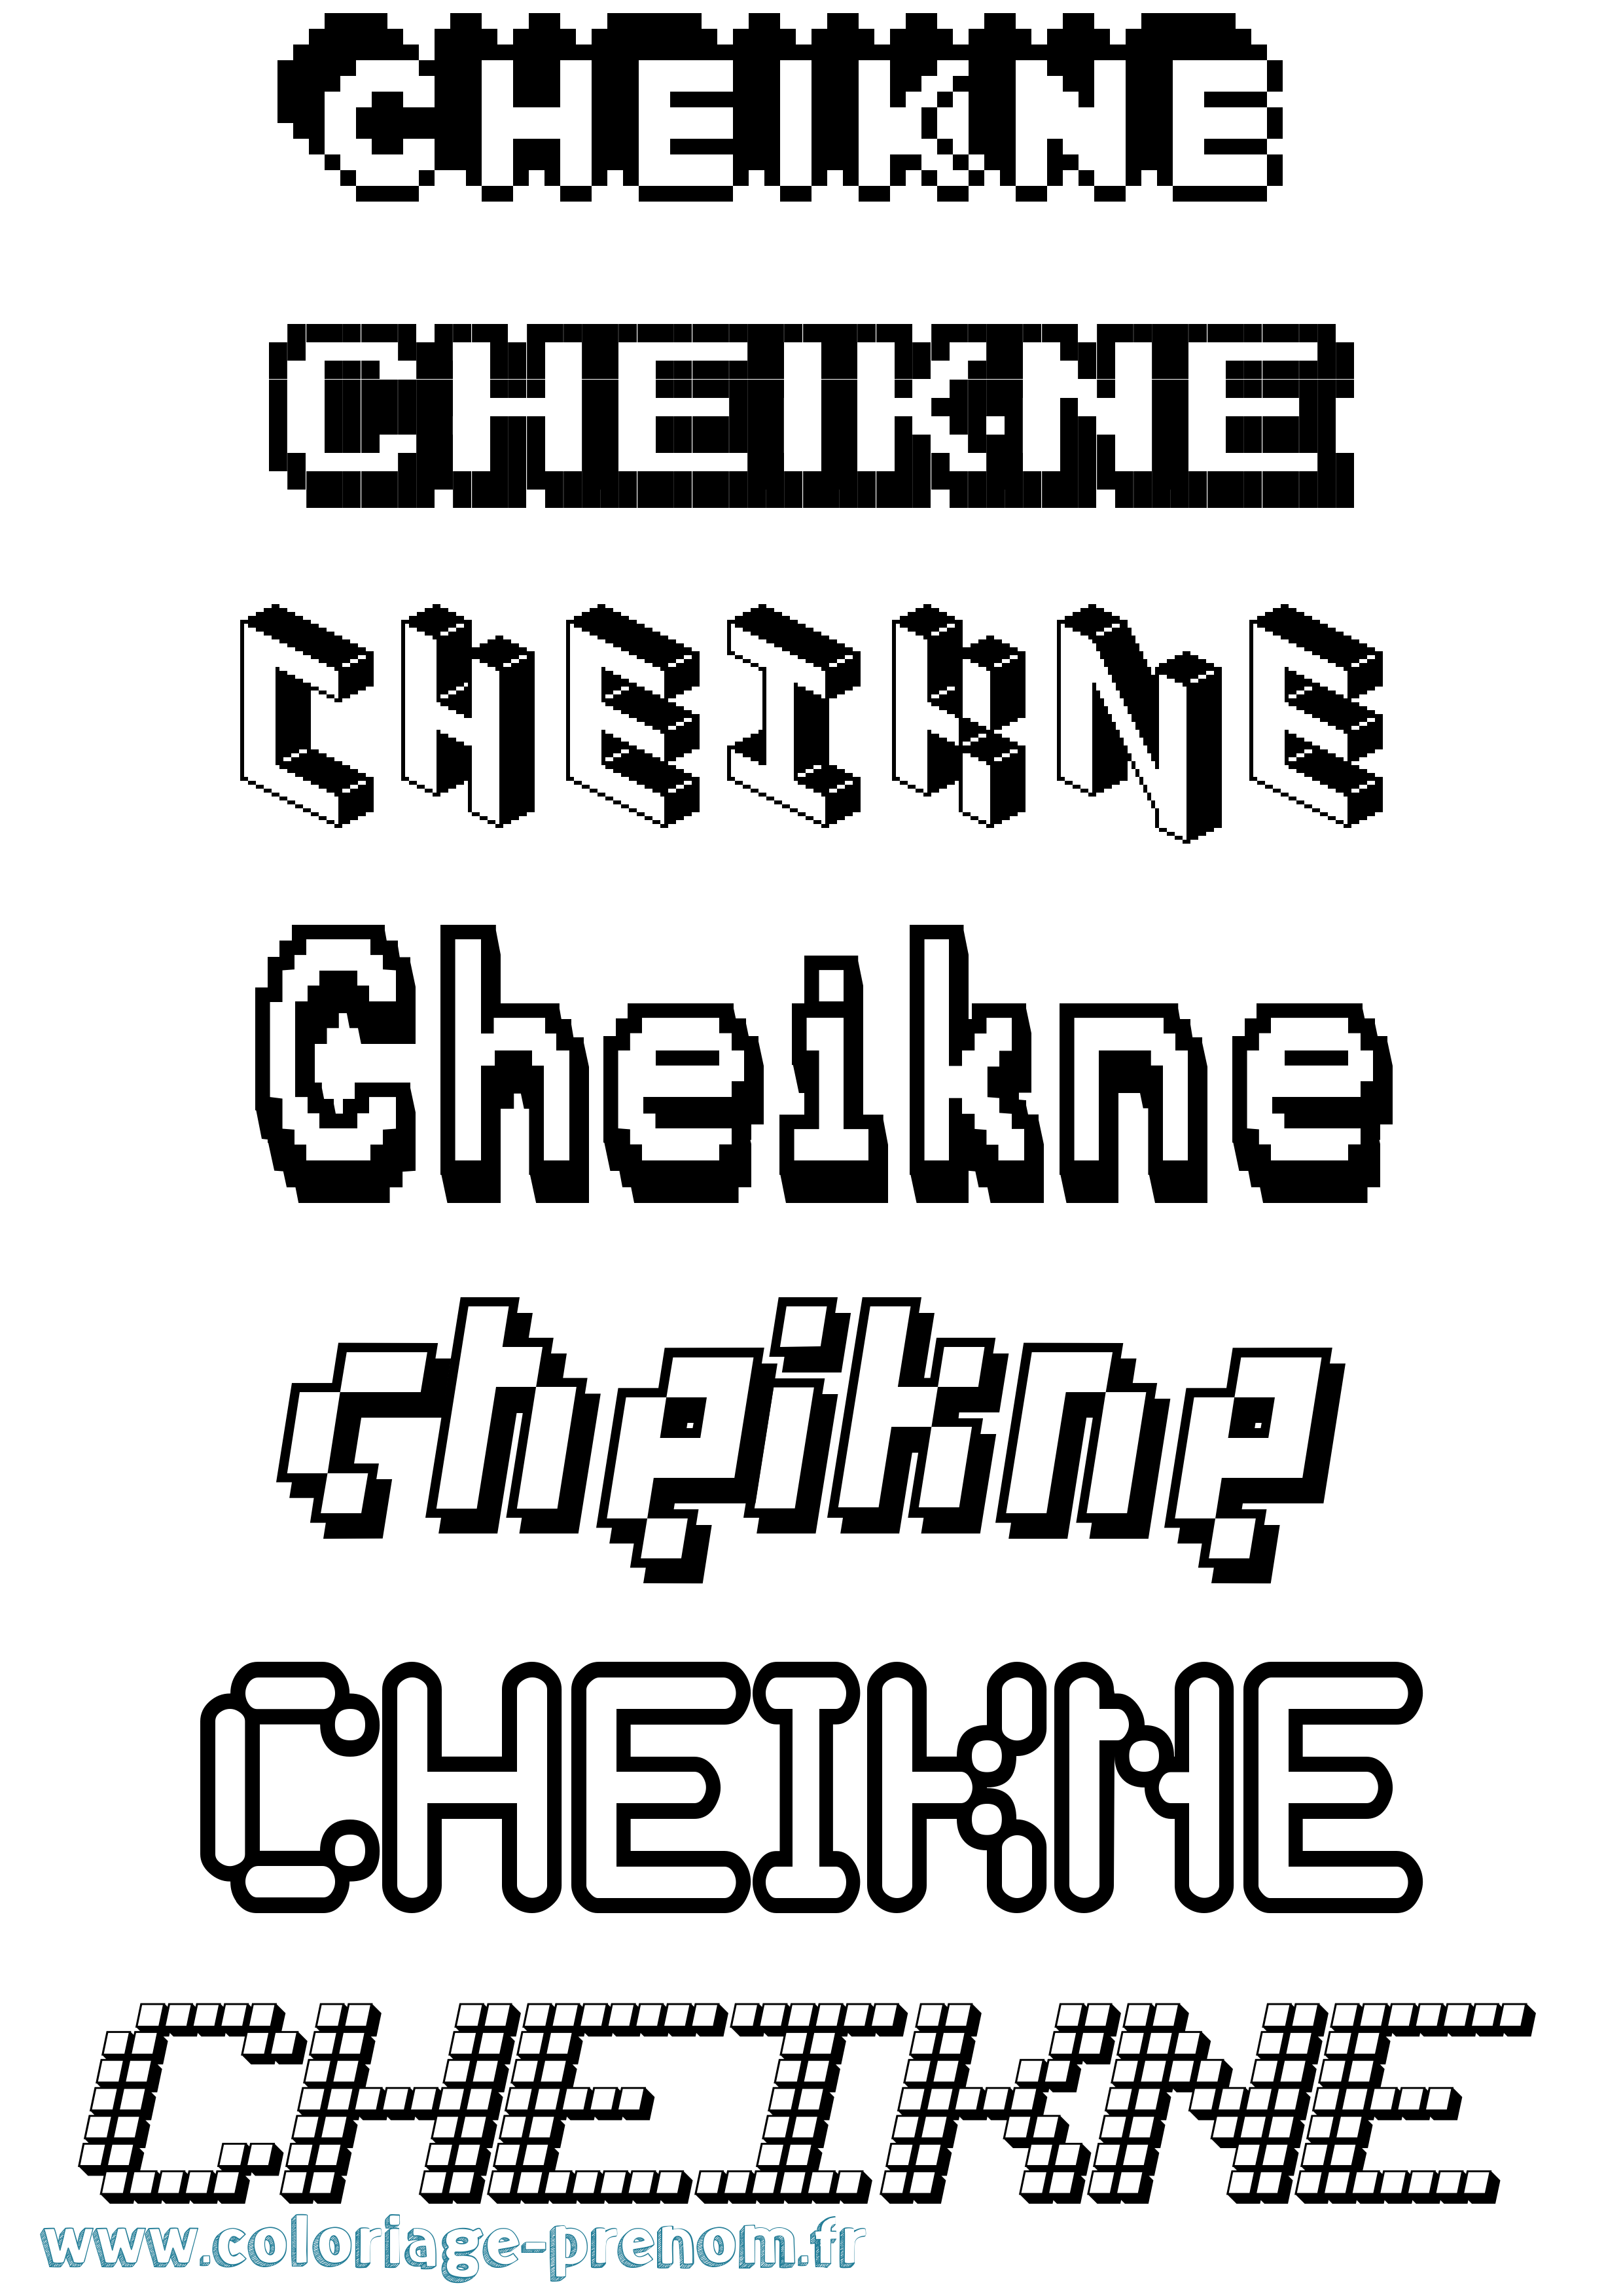 Coloriage prénom Cheikne Pixel